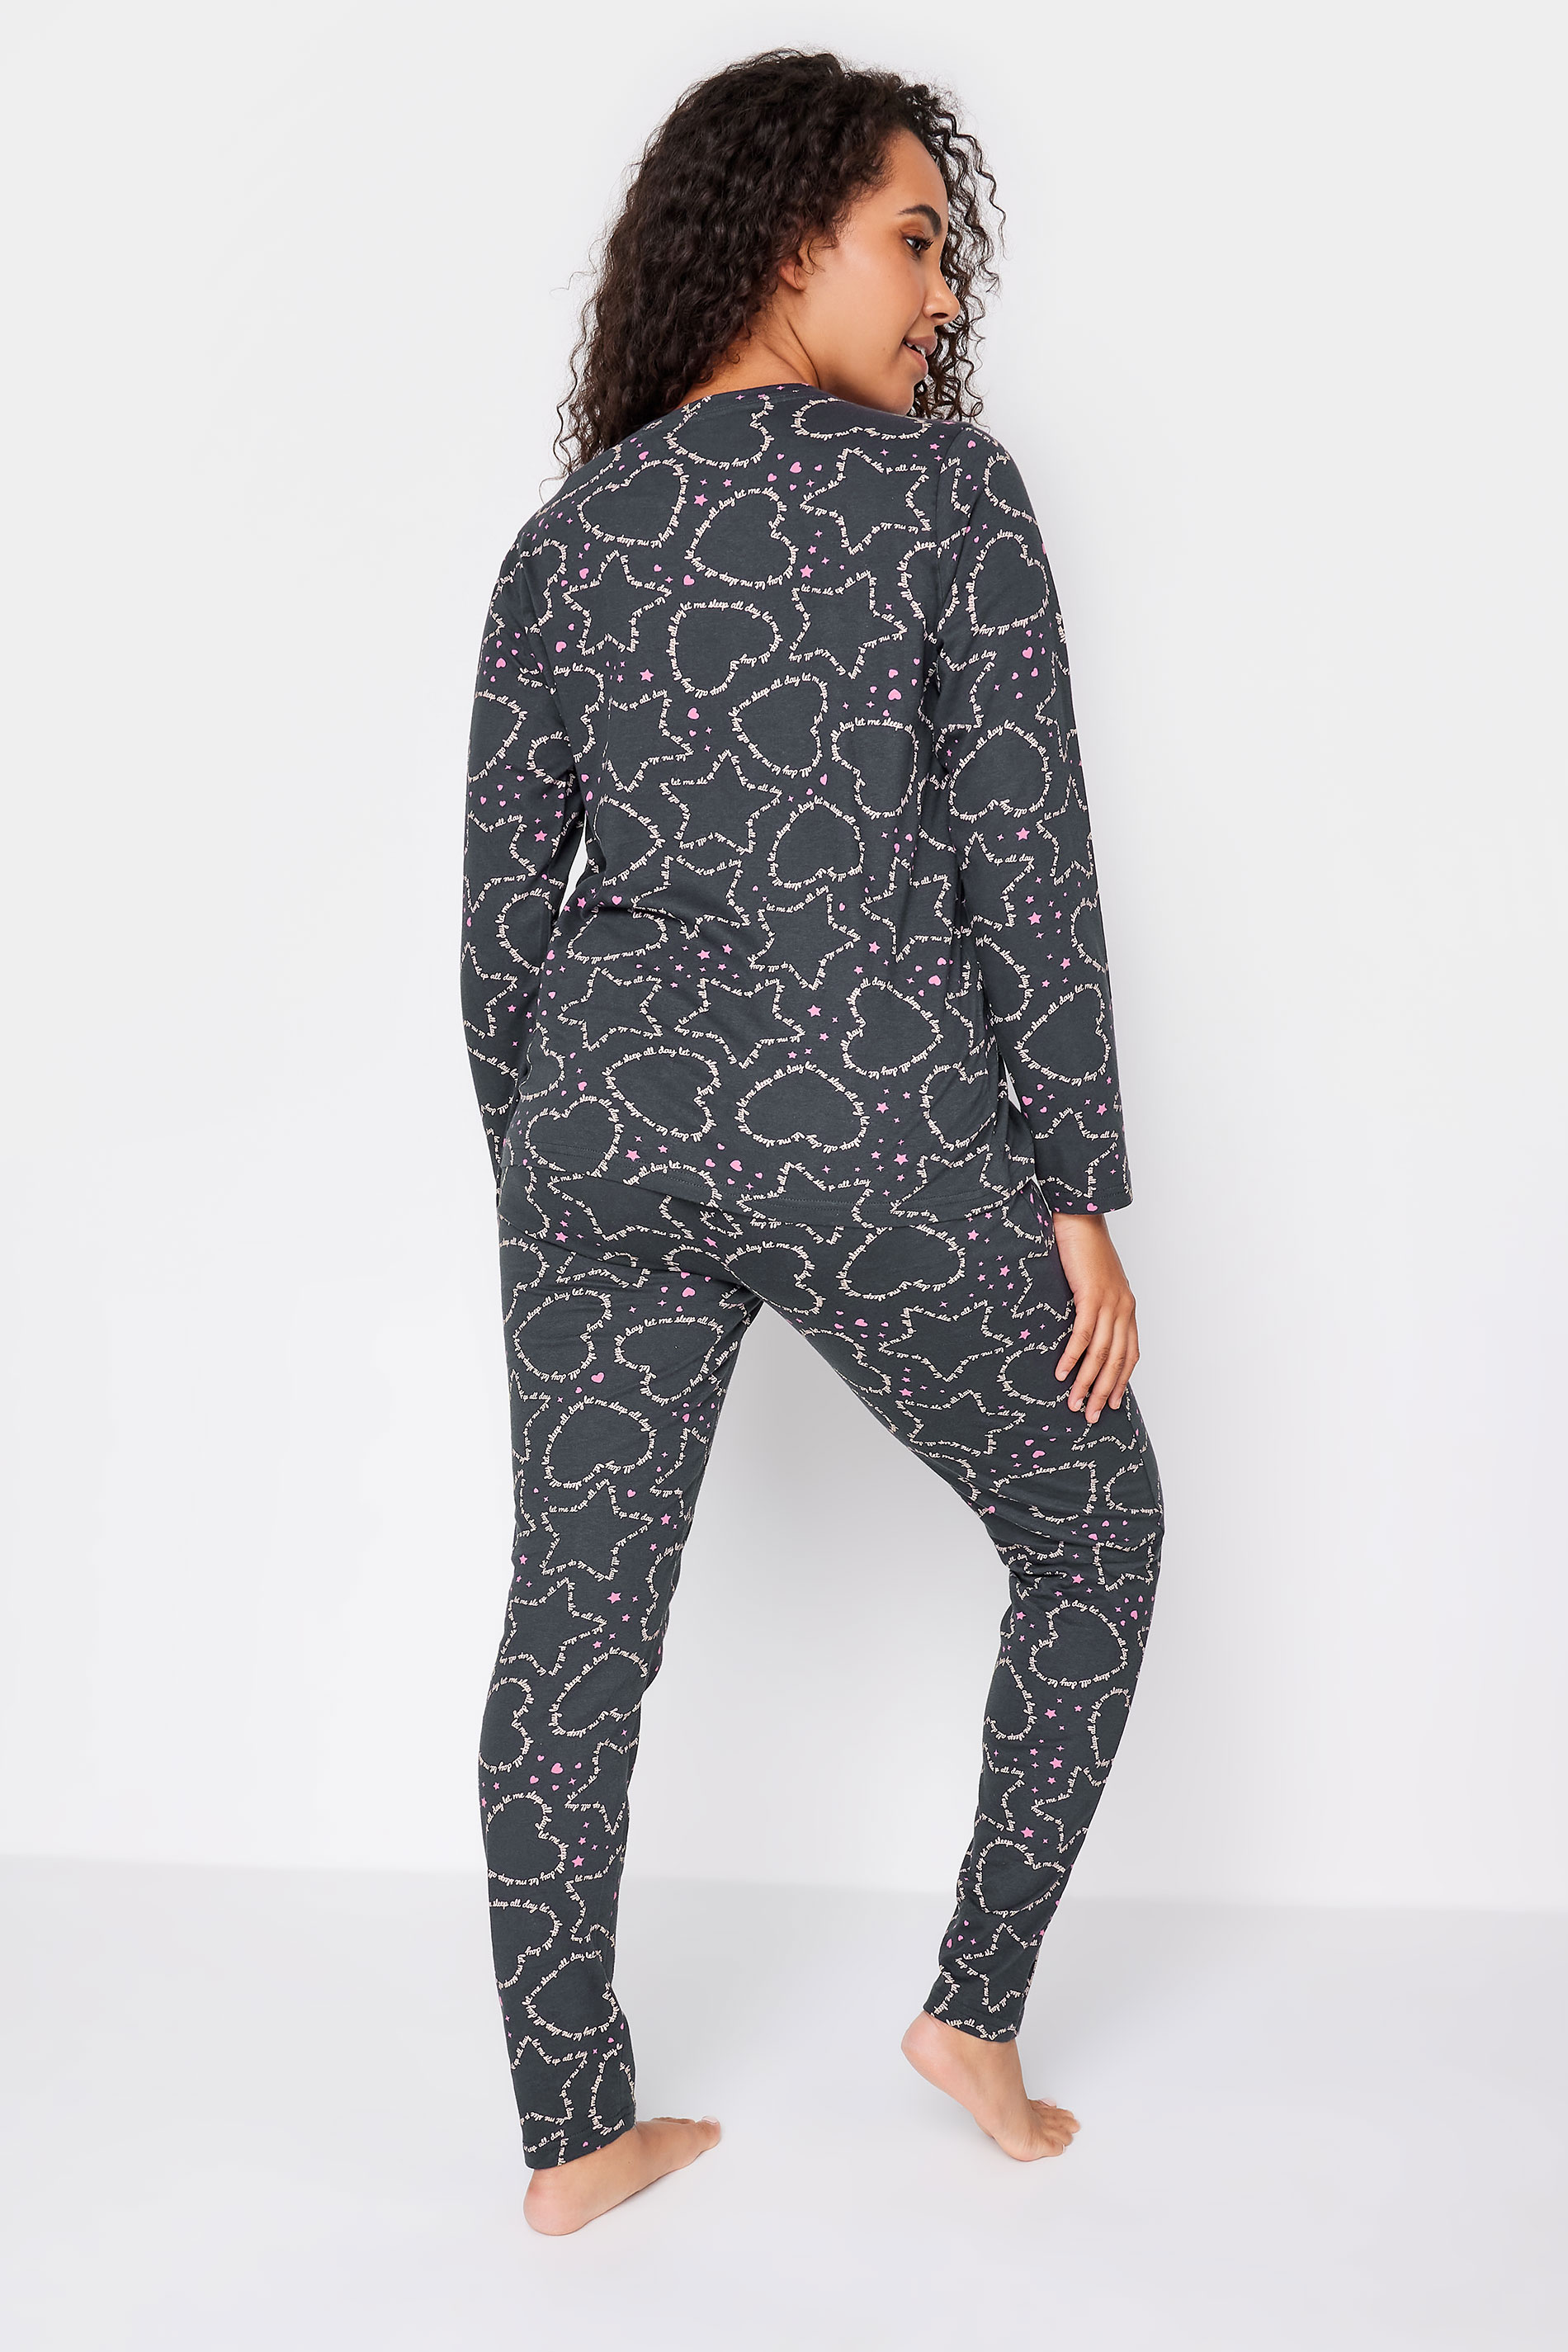 M&Co Grey Cotton 'Sleep All Day' Scripted Heart Print Pyjama Set | M&Co 3